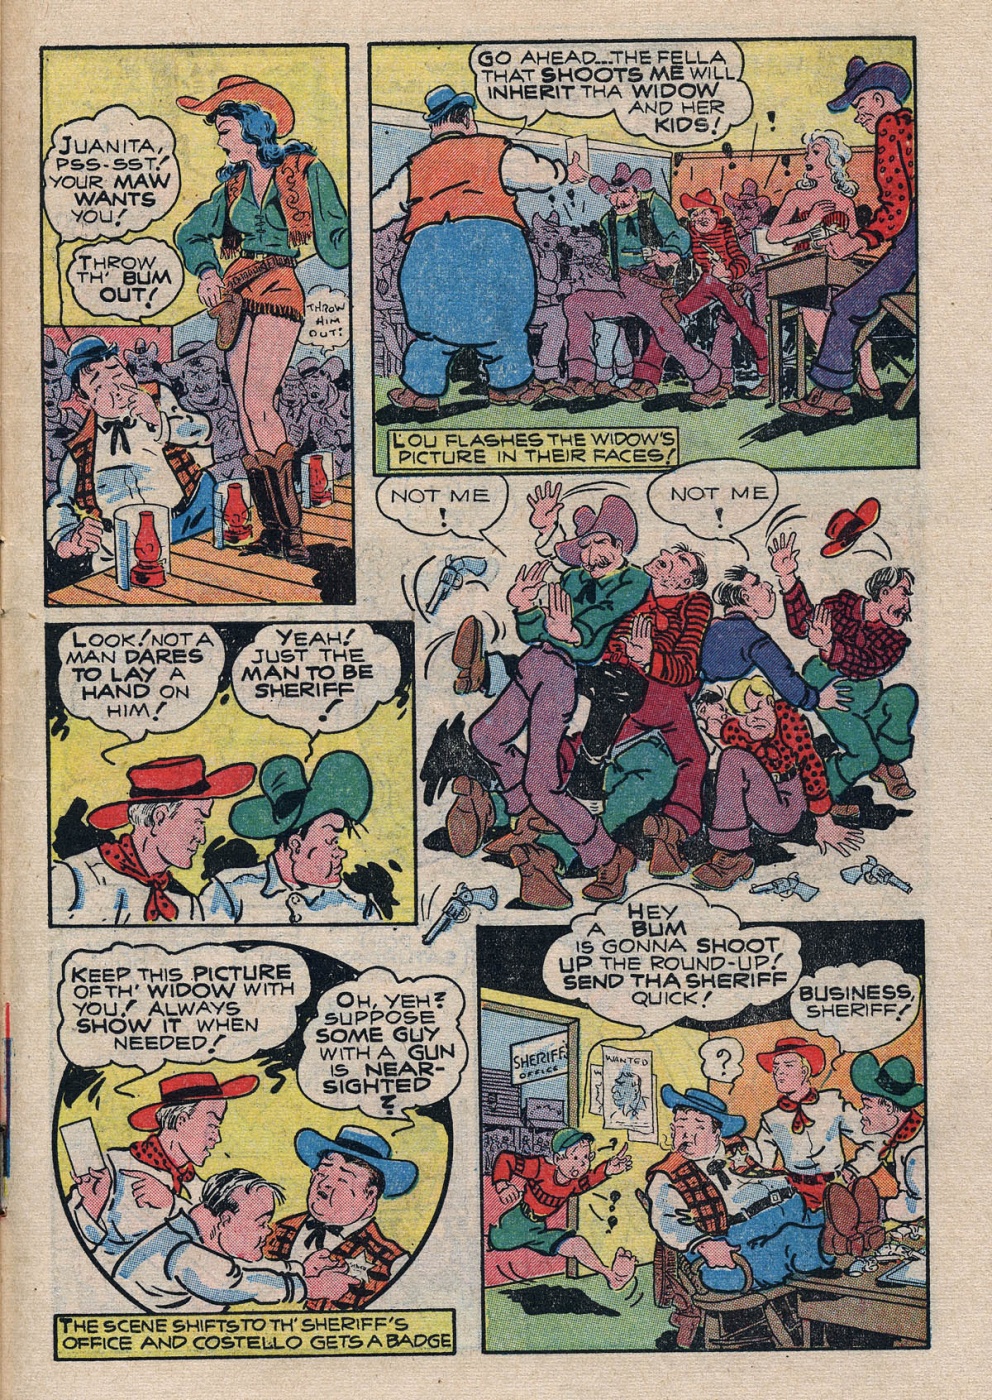 Funny Comic Strips - Abbott and Costello 001 (Feb 1948) 29